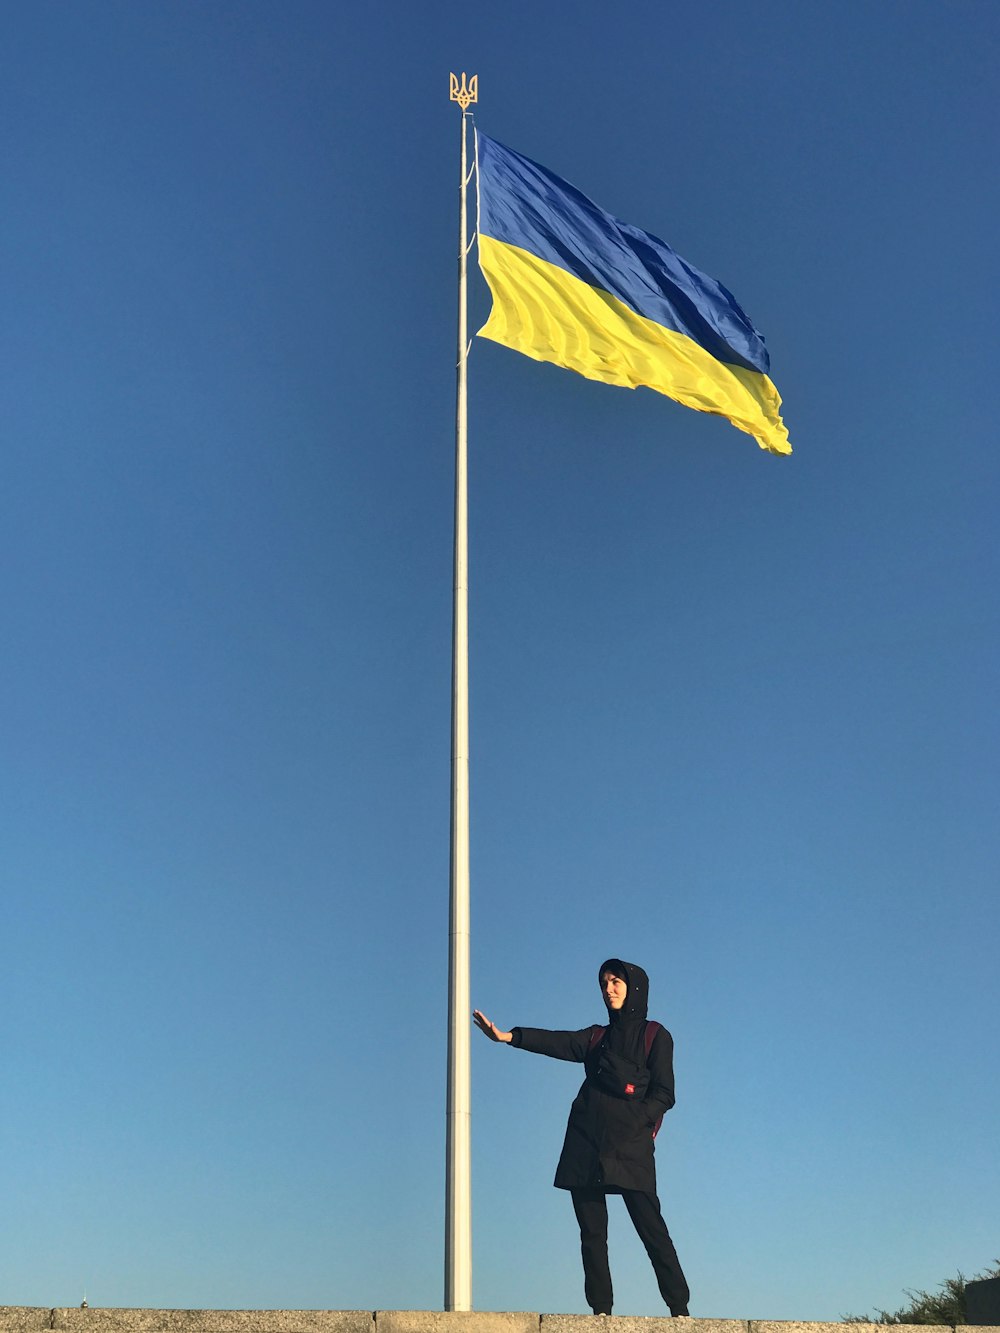 a man standing next to a flag pole